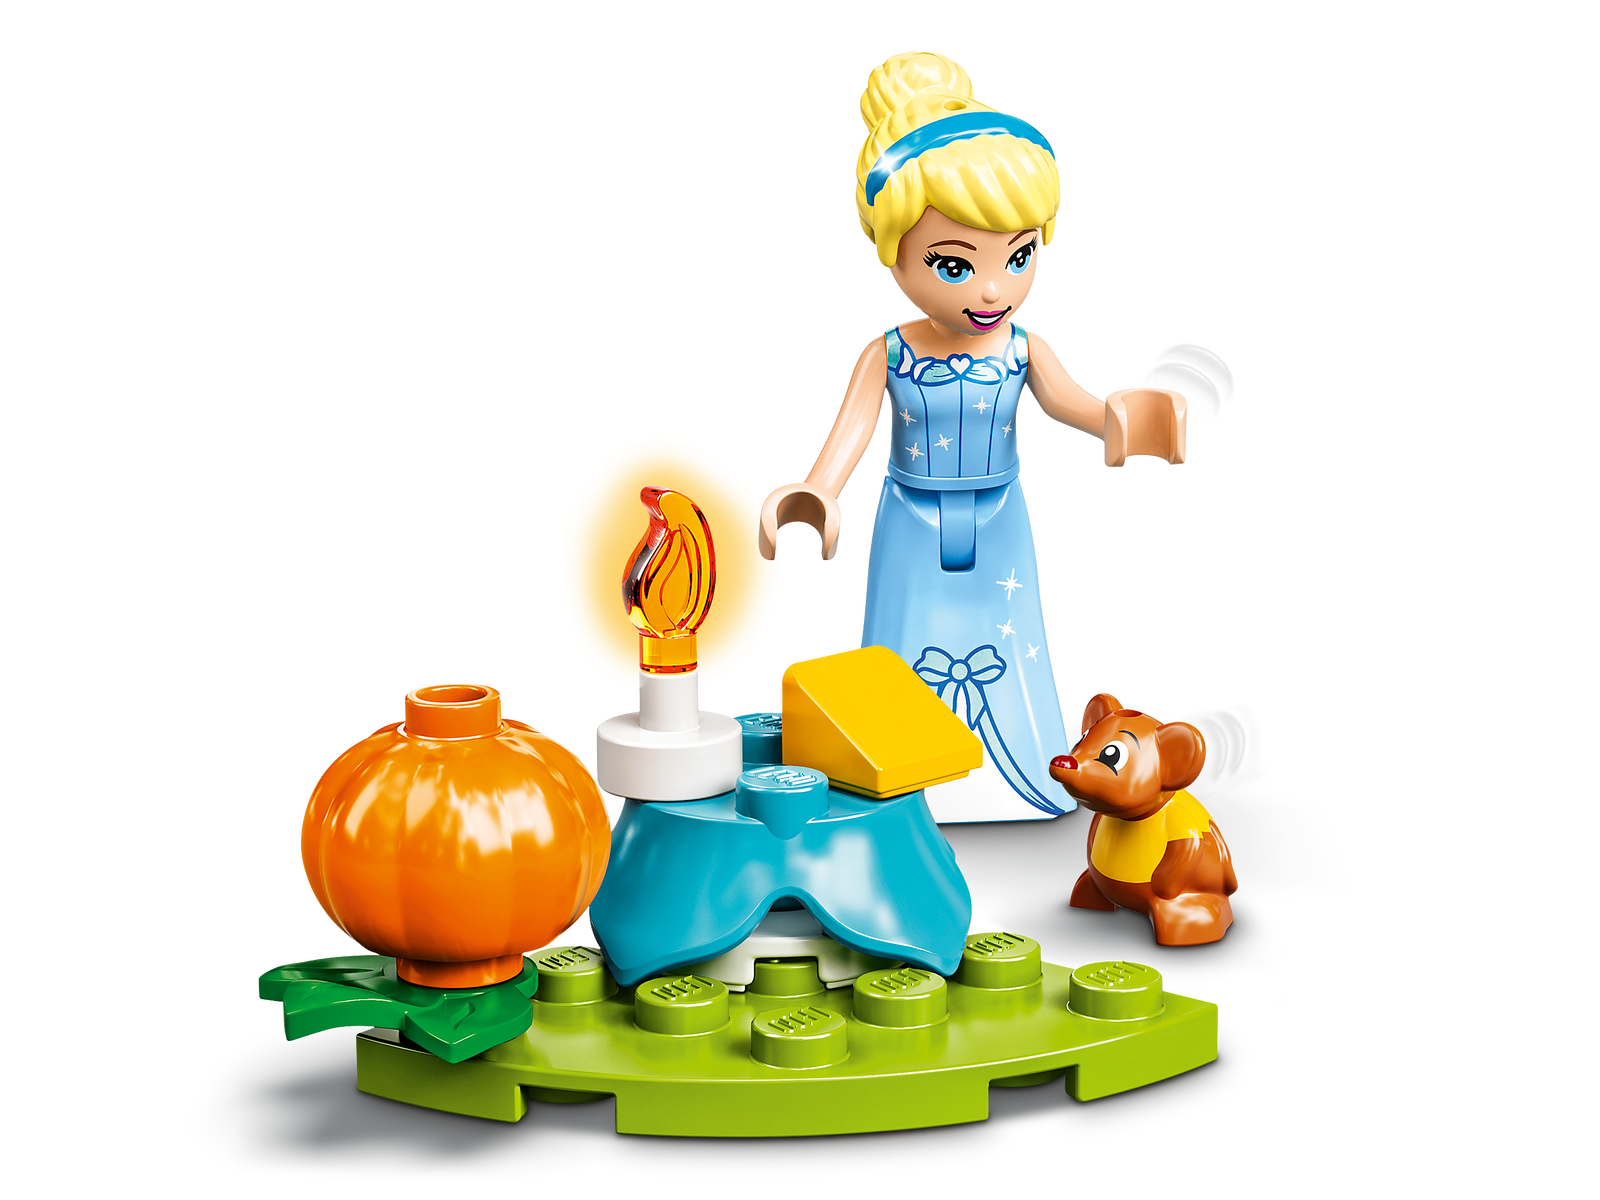 LEGO Disney Cinderella's Royal Carriage 43192